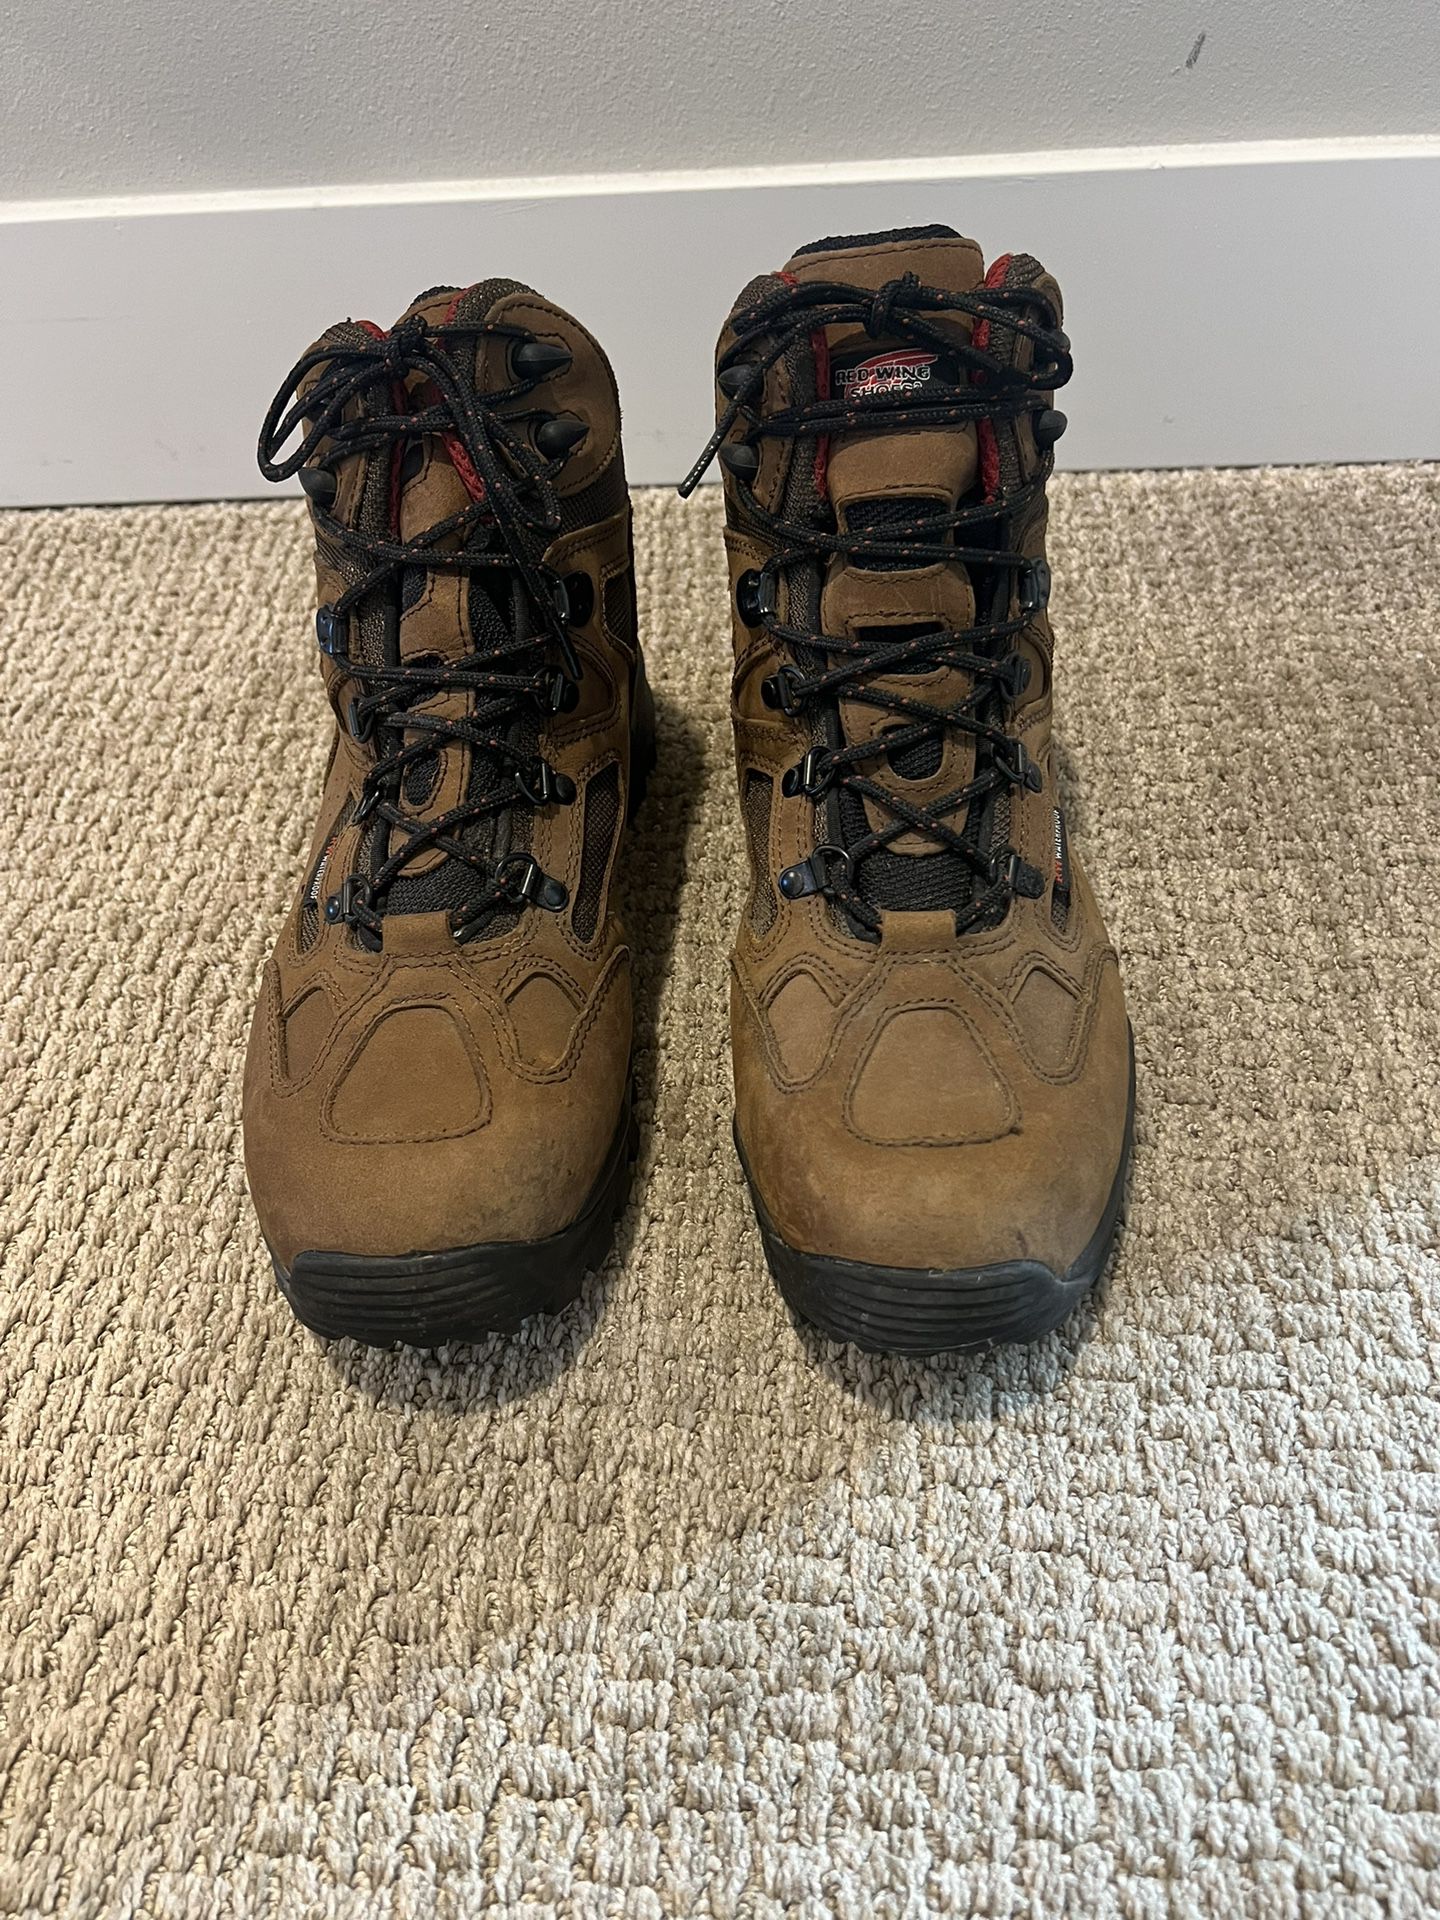 Red Wing Shoes - Truhiker 6” waterproof safety toe hiker boot - Men’s 11.5